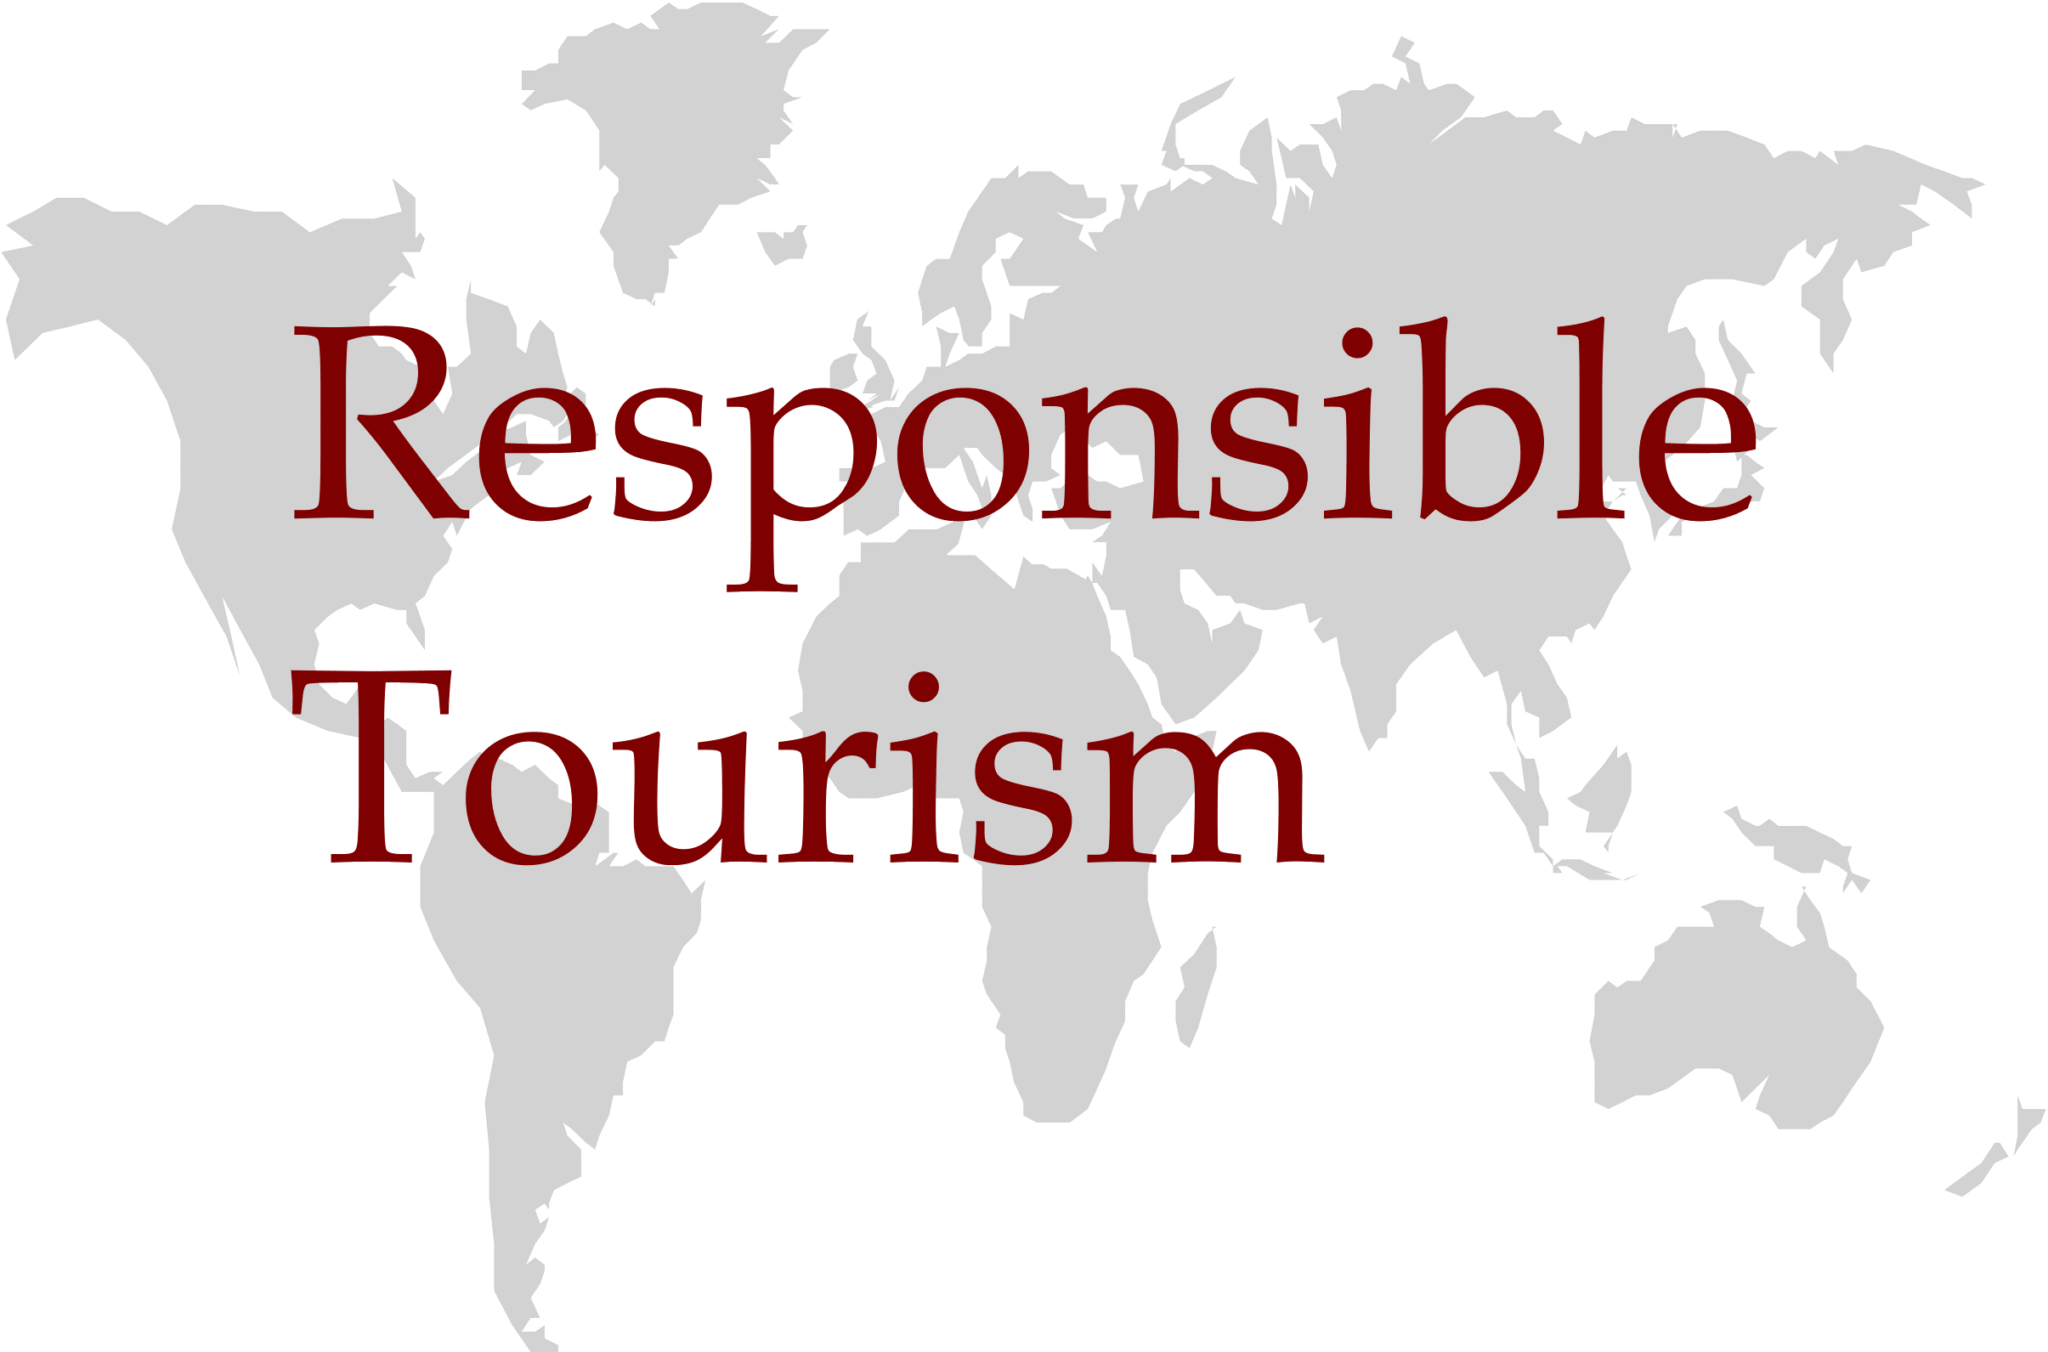 responsible tourism mission